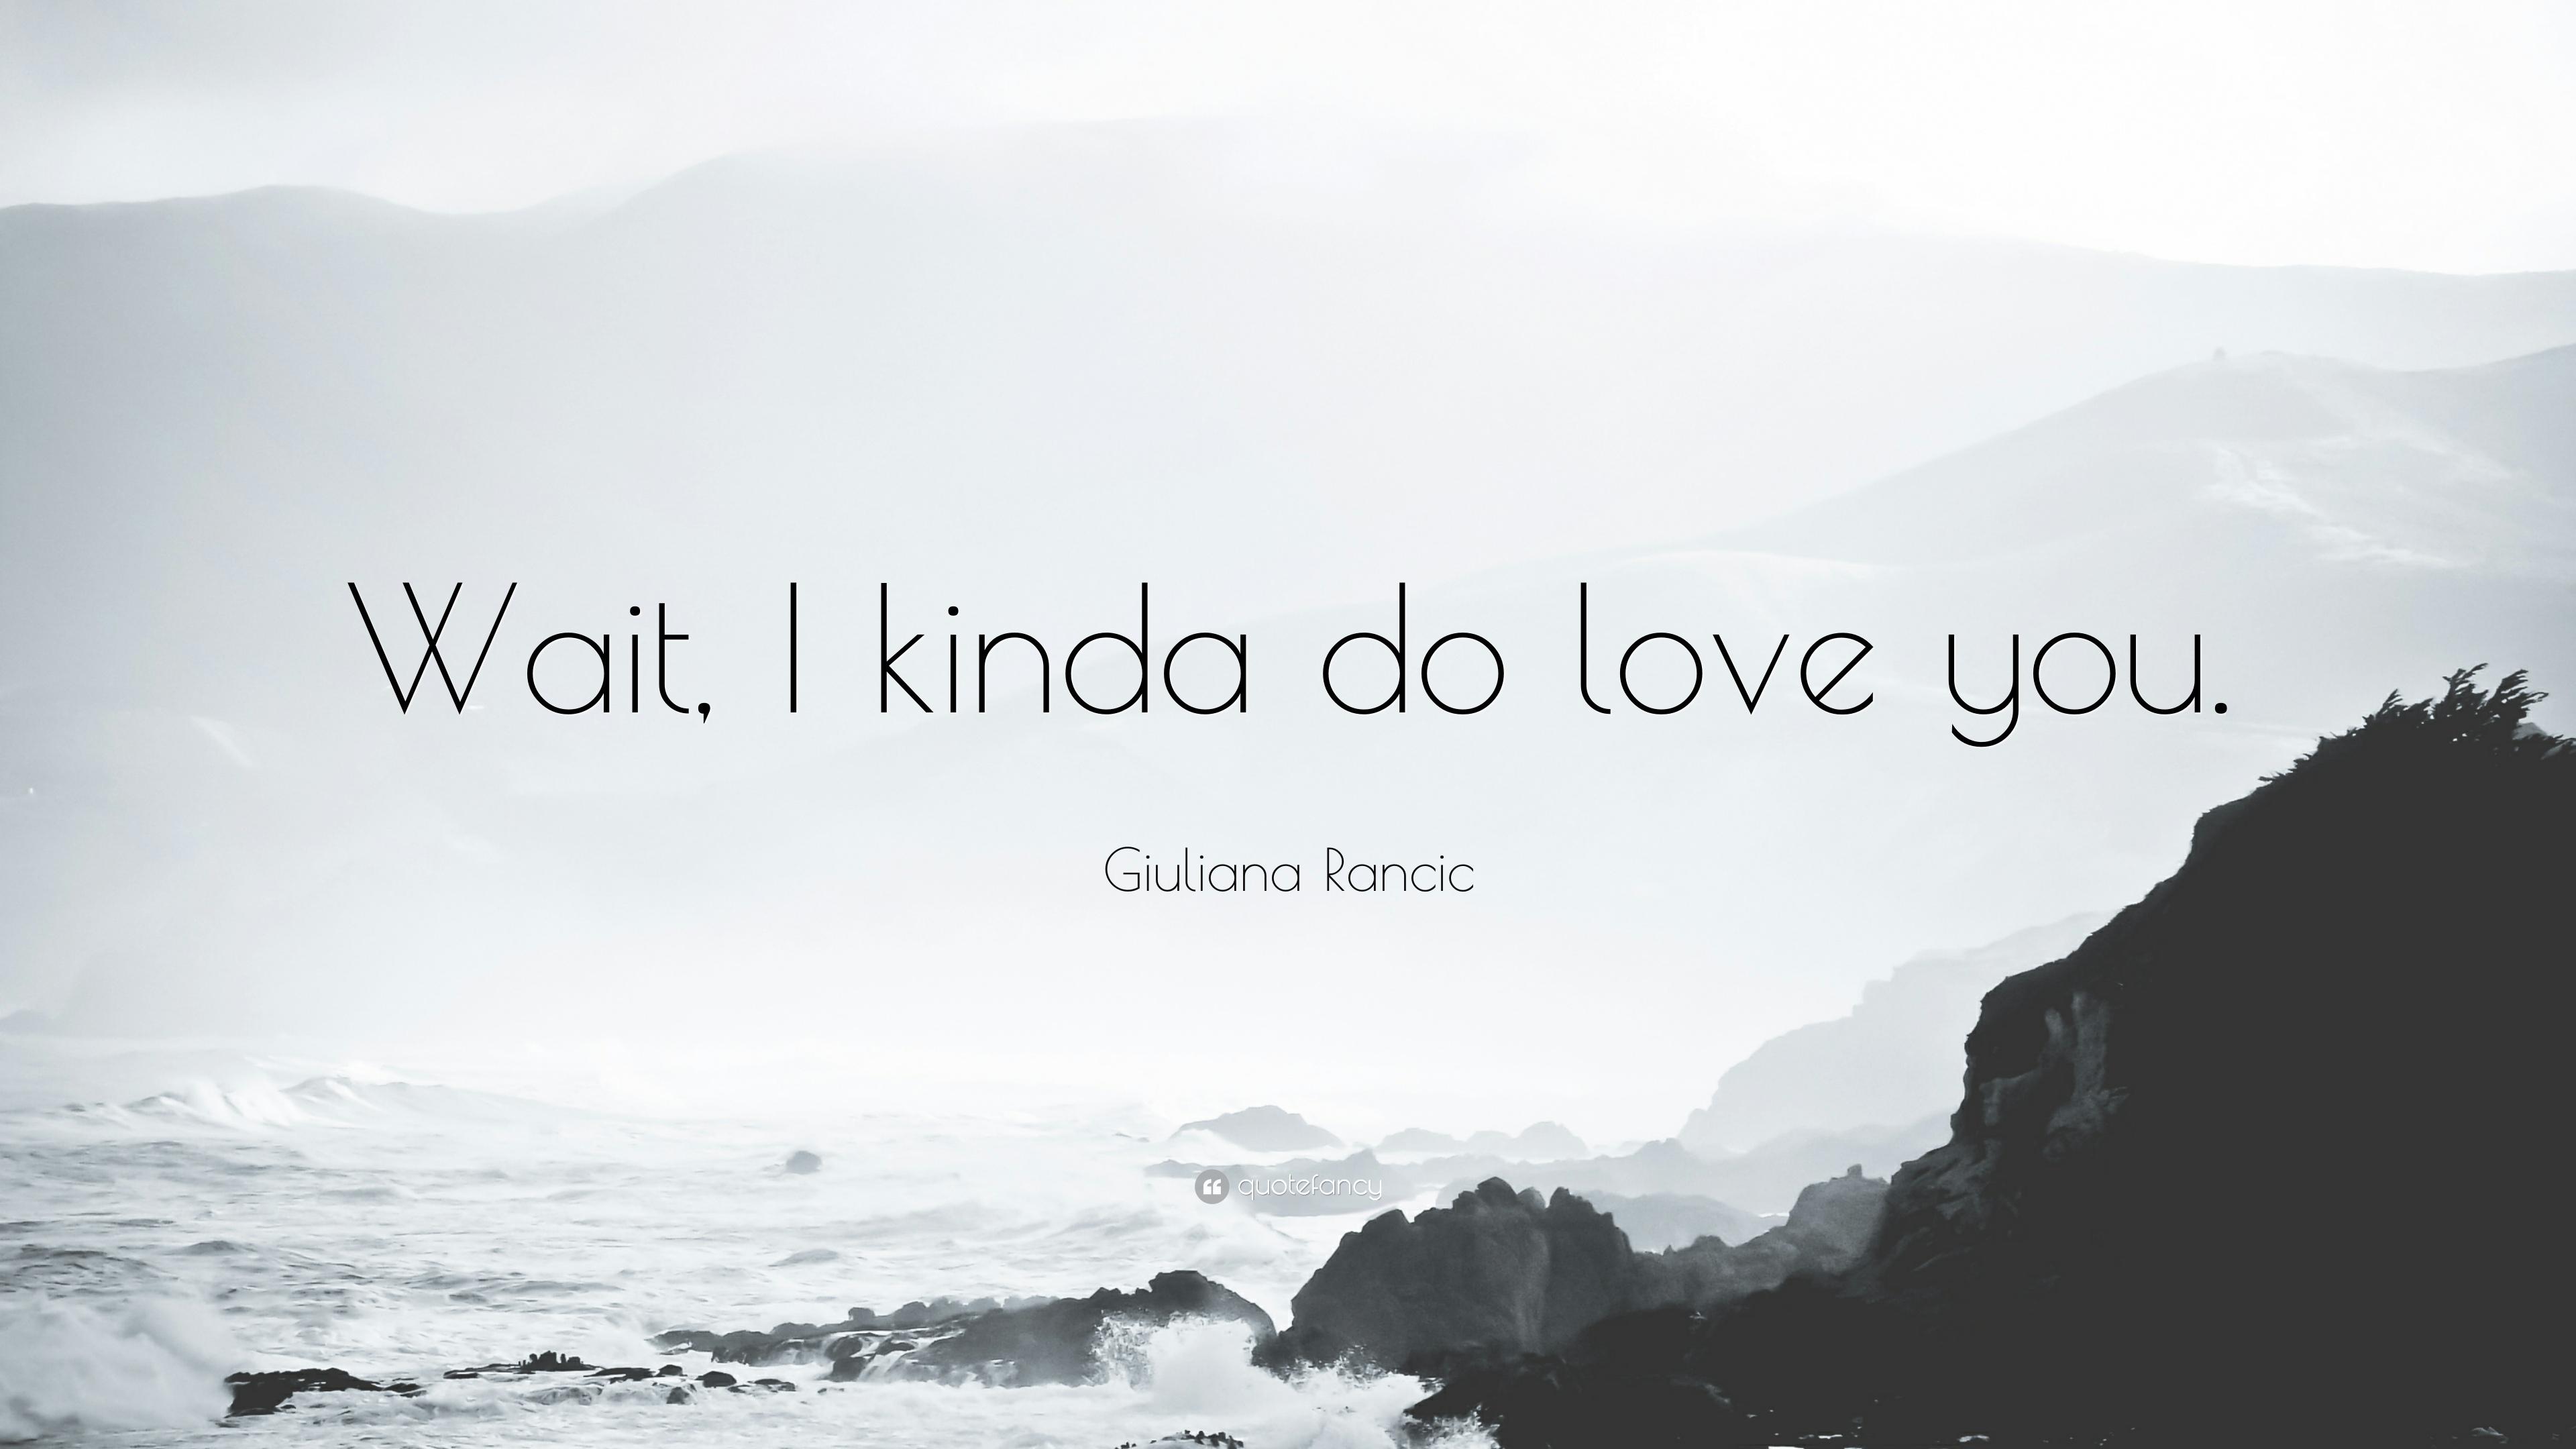 Giuliana Rancic Quote: “Wait, I kinda do love you.” 7 wallpaper